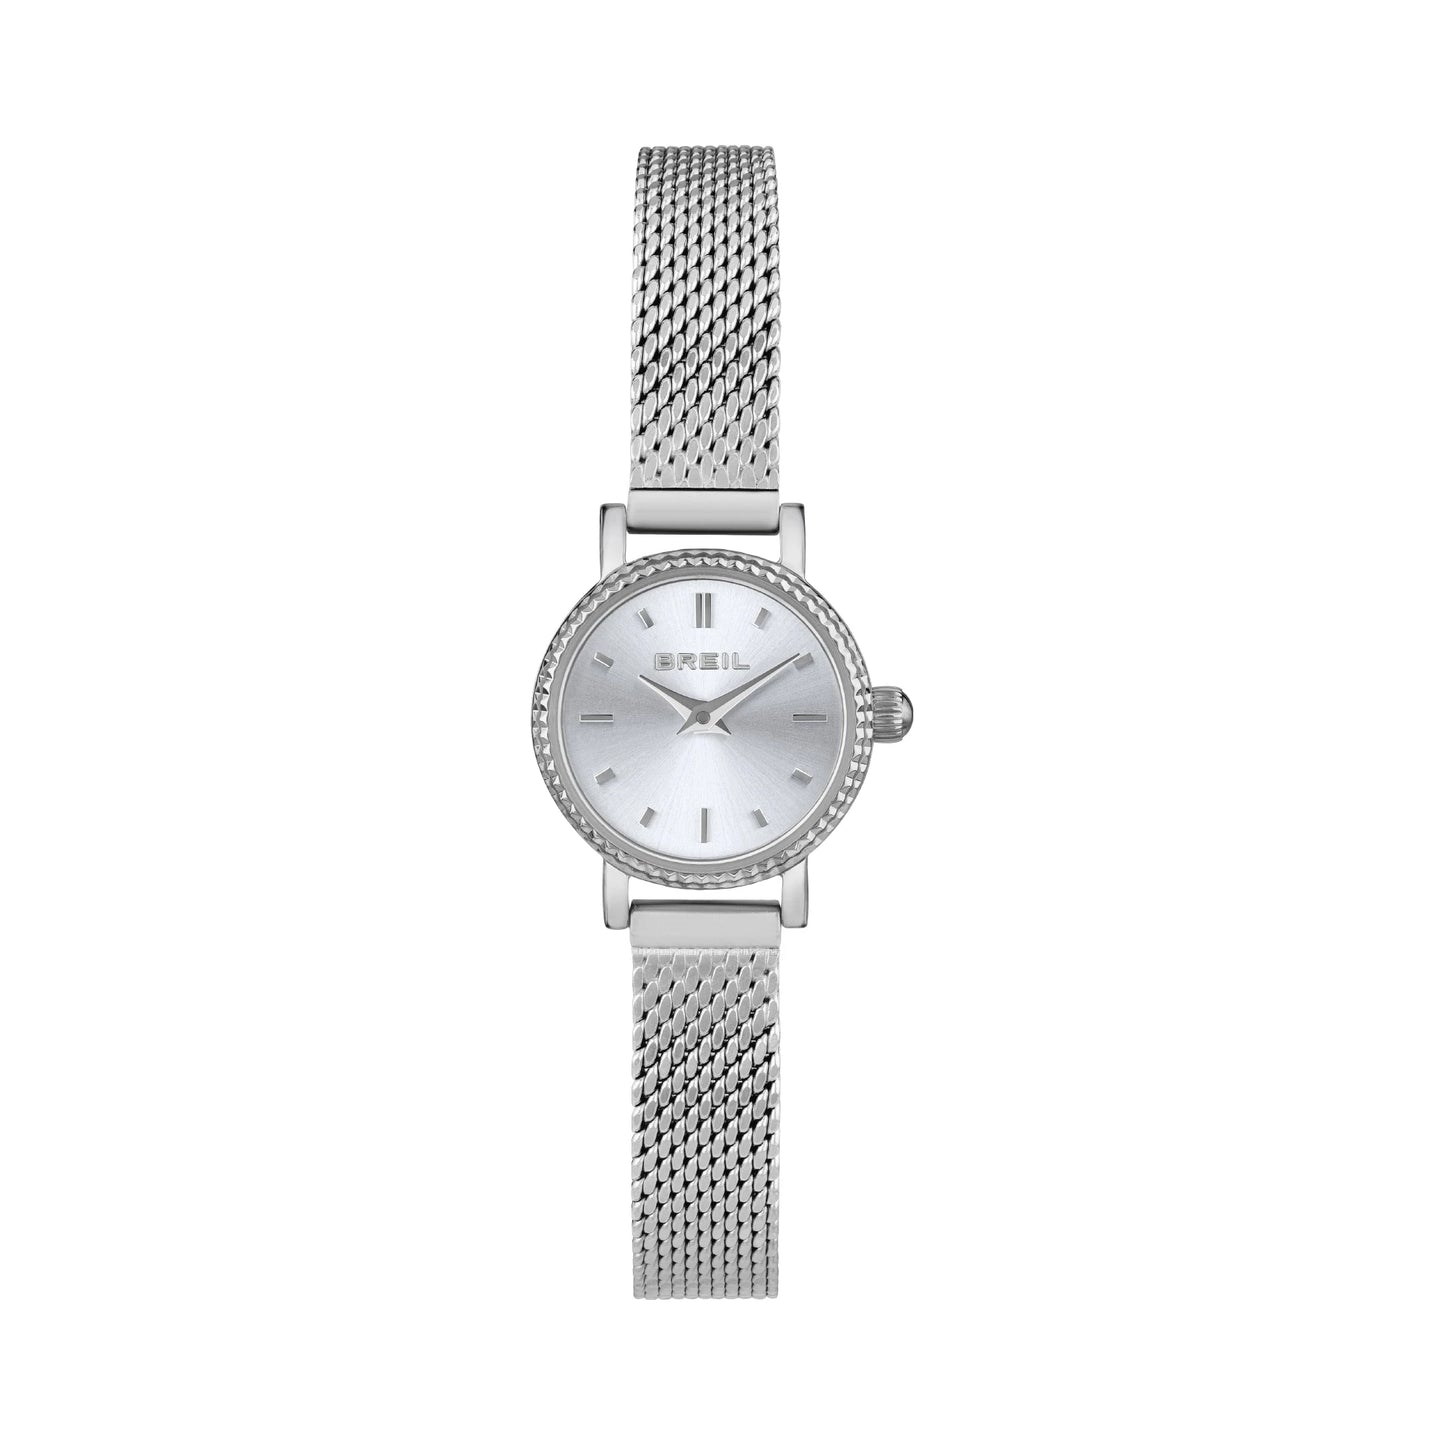 2H Darling Silver 18mm TW1934 Reloj para mujer